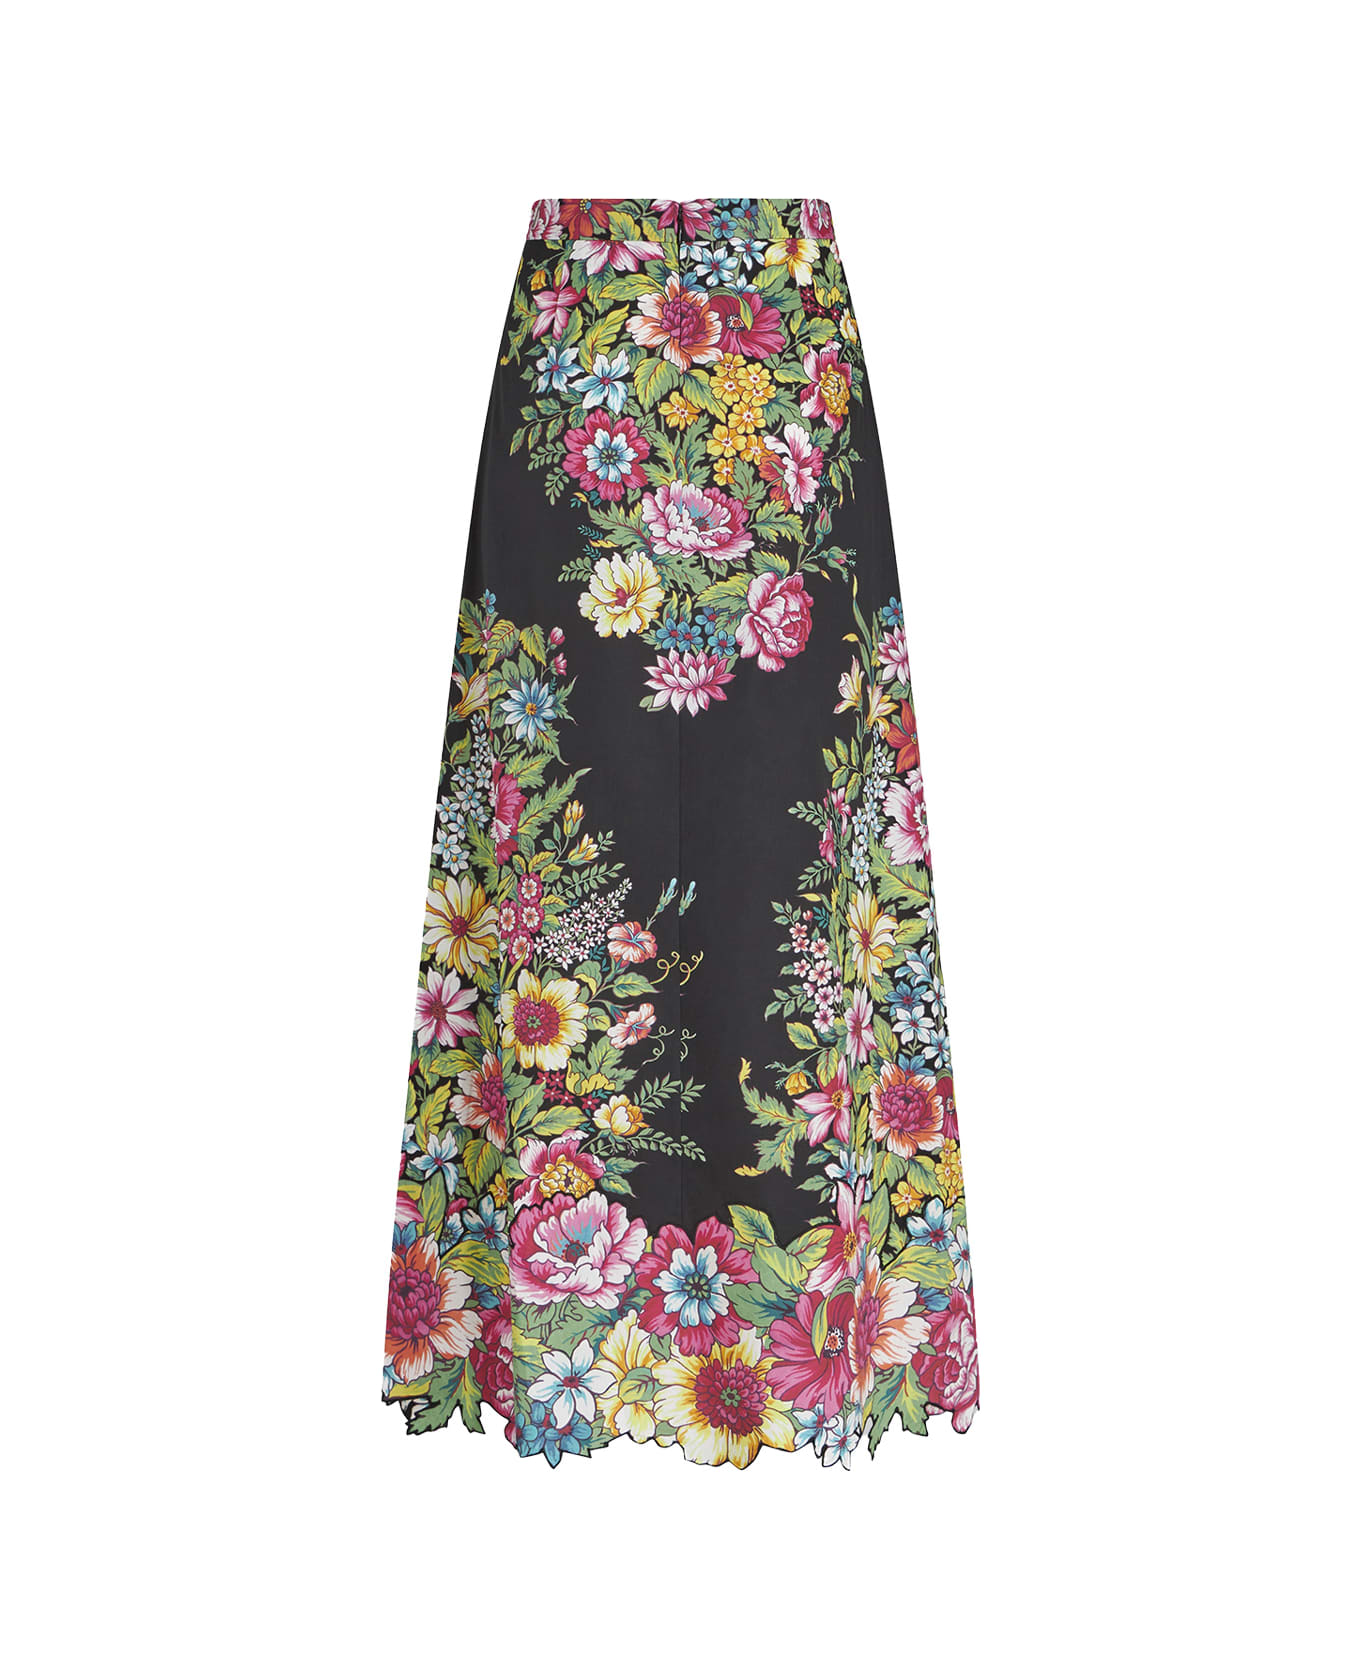 Etro Black Skirt With Bouquet Print - Black